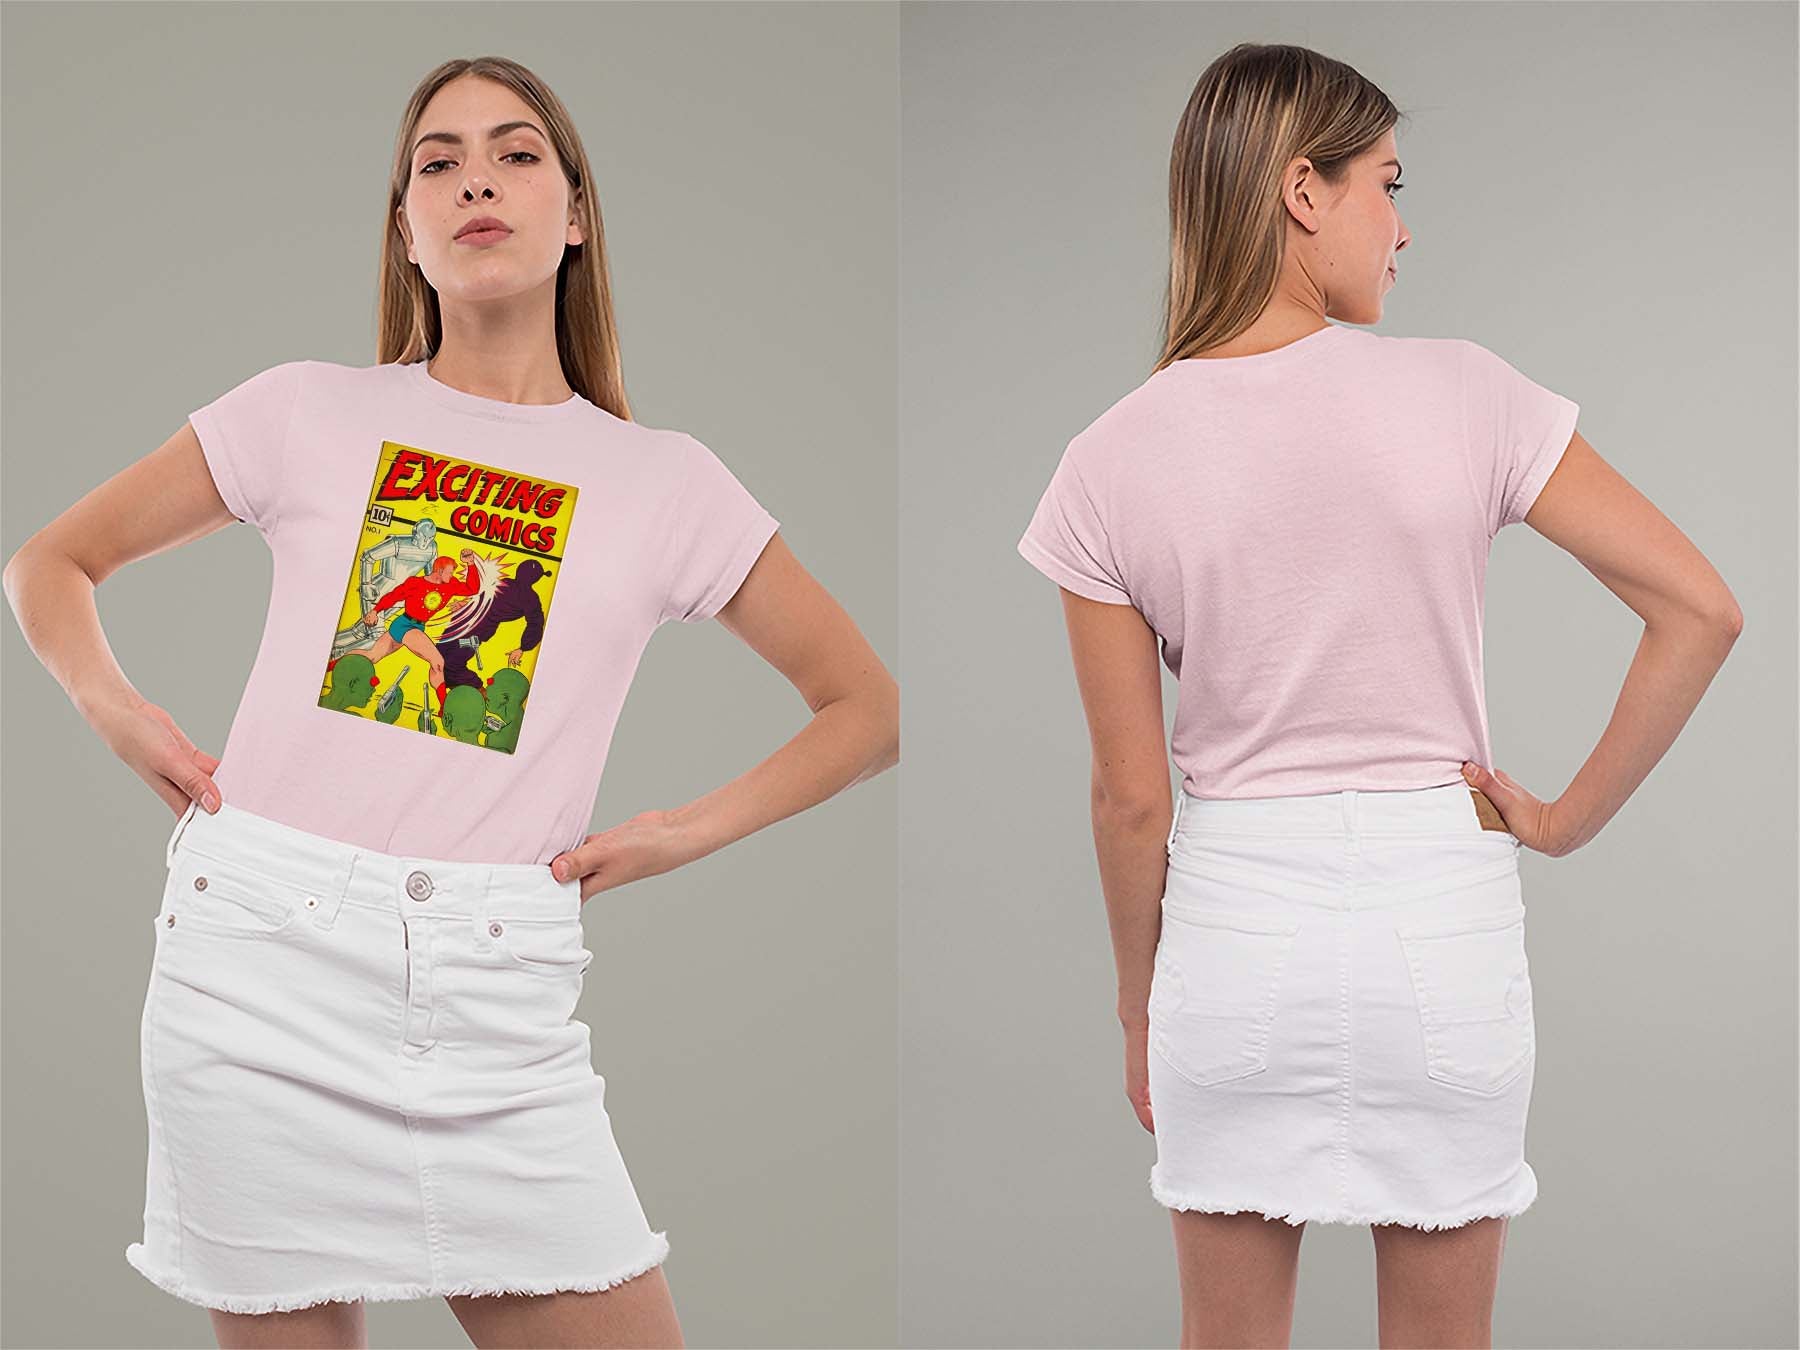 Exciting Comics No.1 Ladies Crew (Round) Neck Shirt Small Light Pink